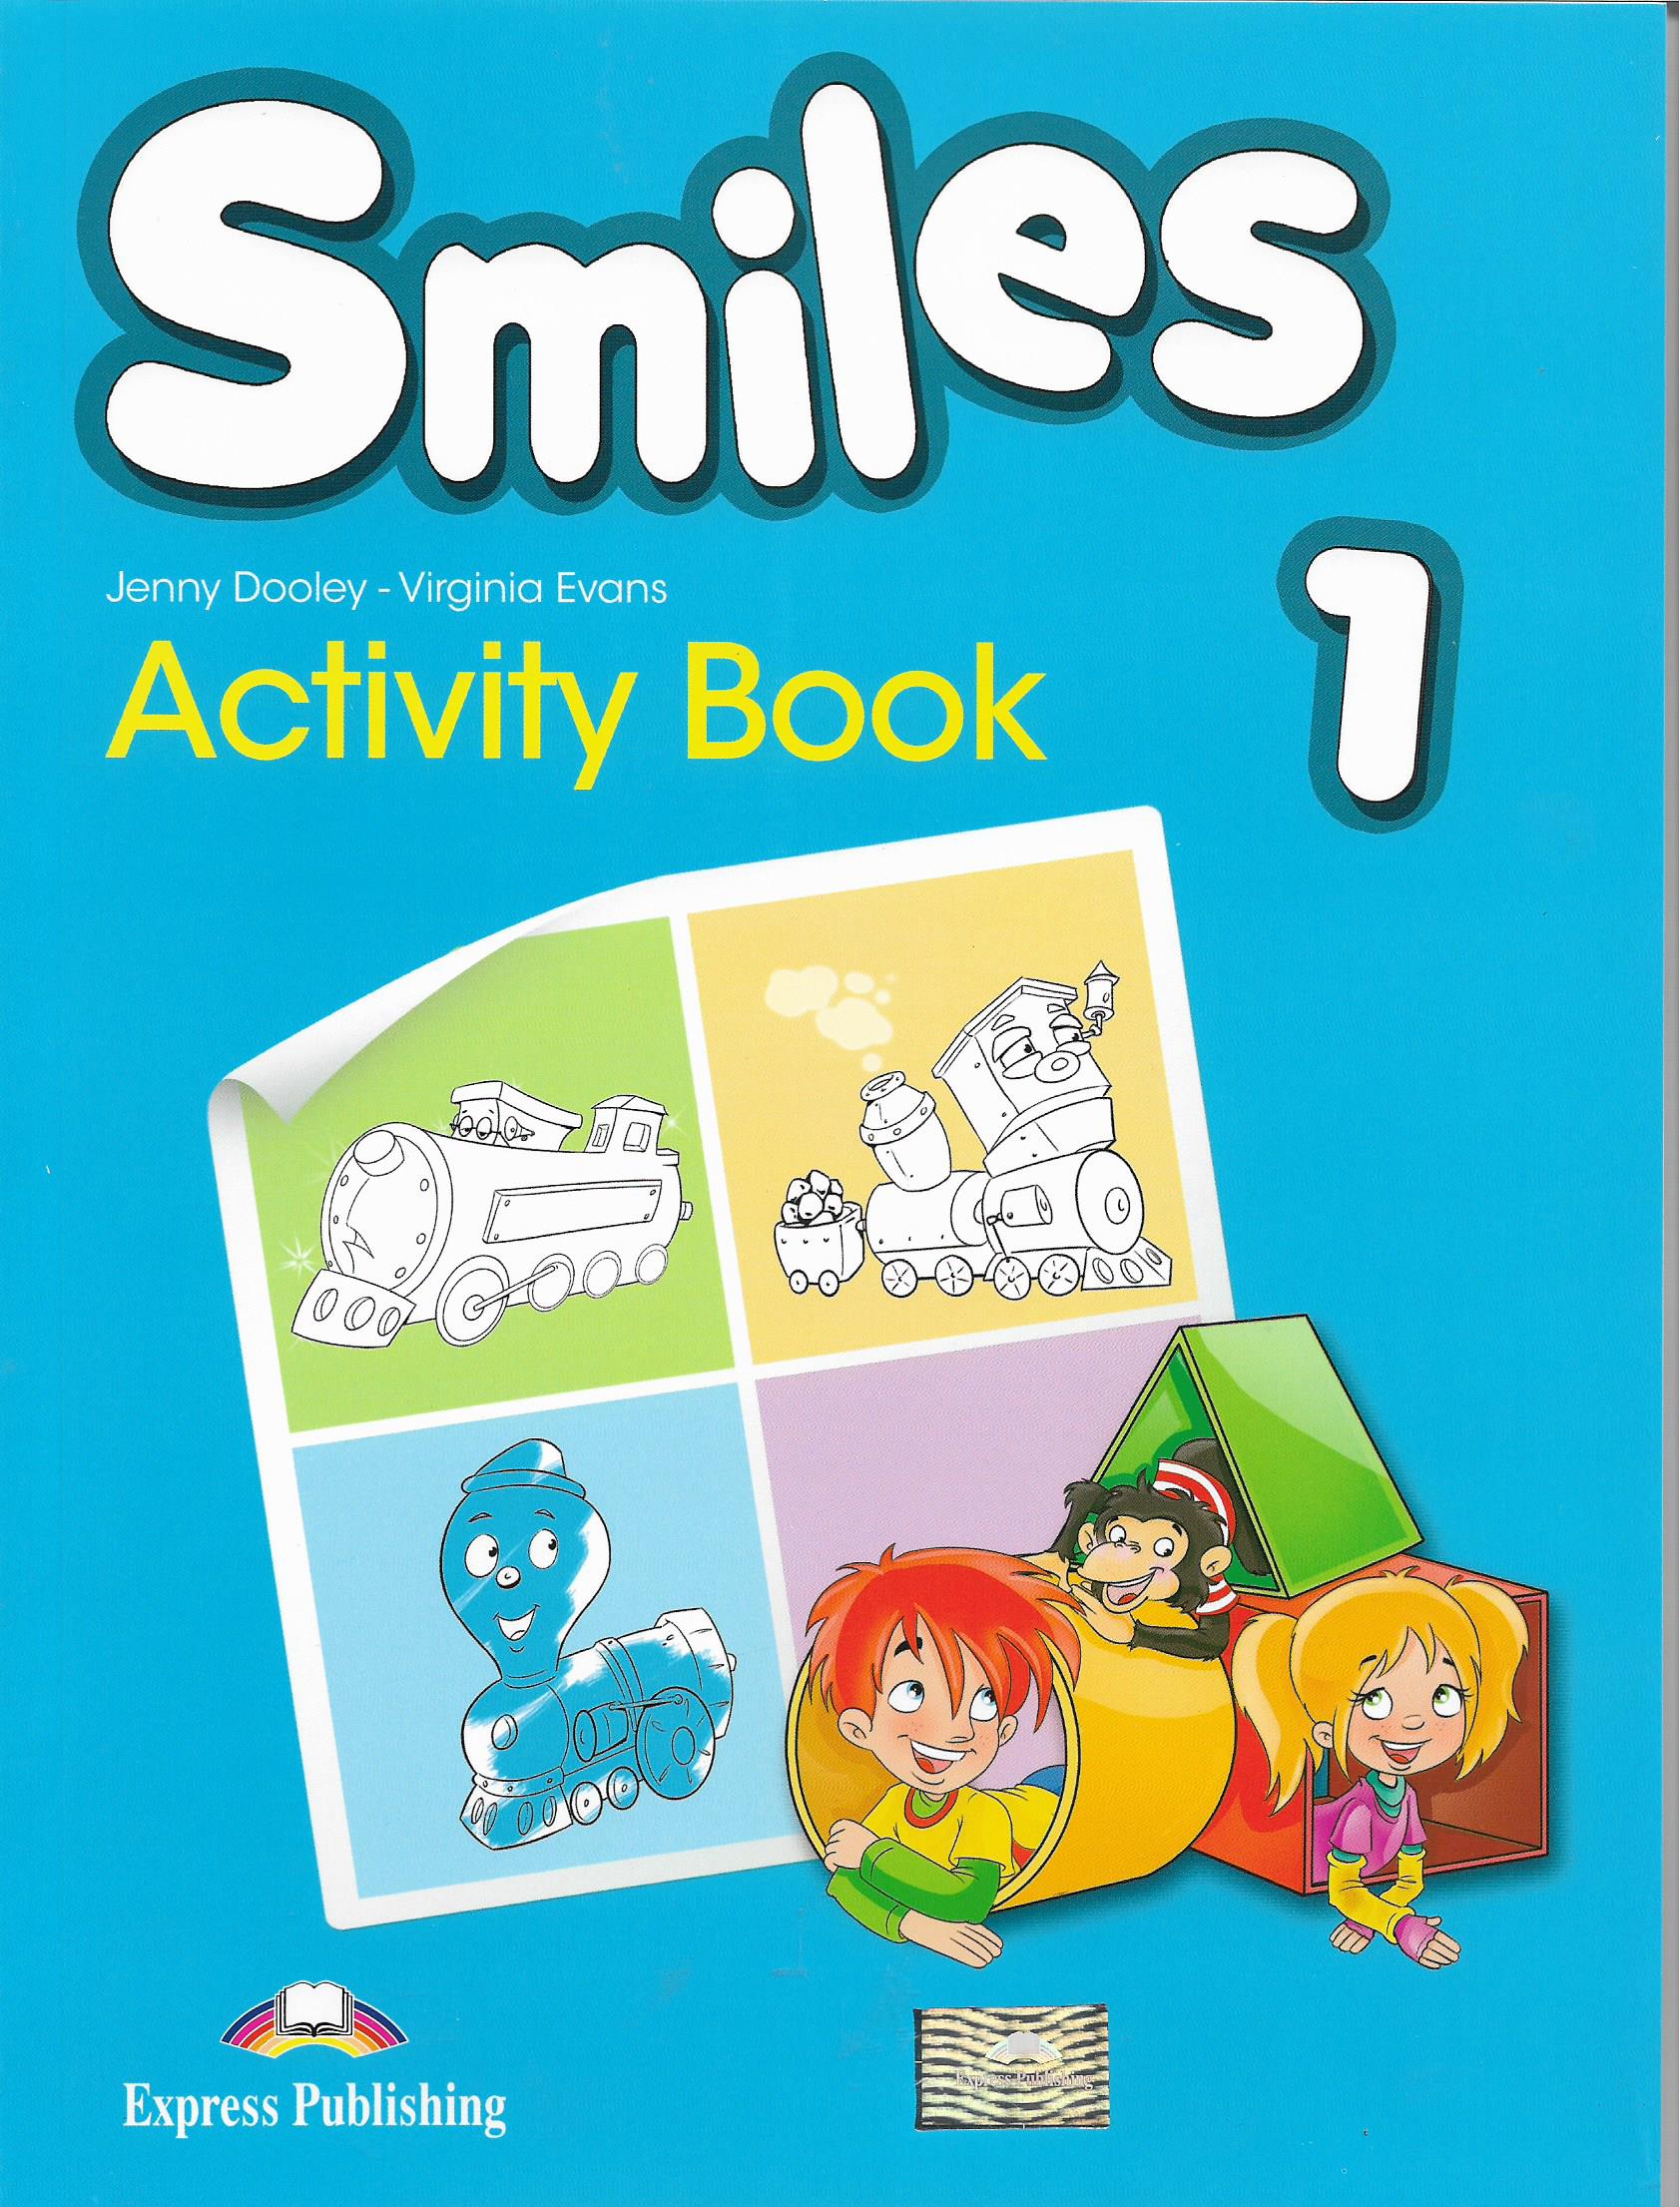 Smiles 1 Activity Book